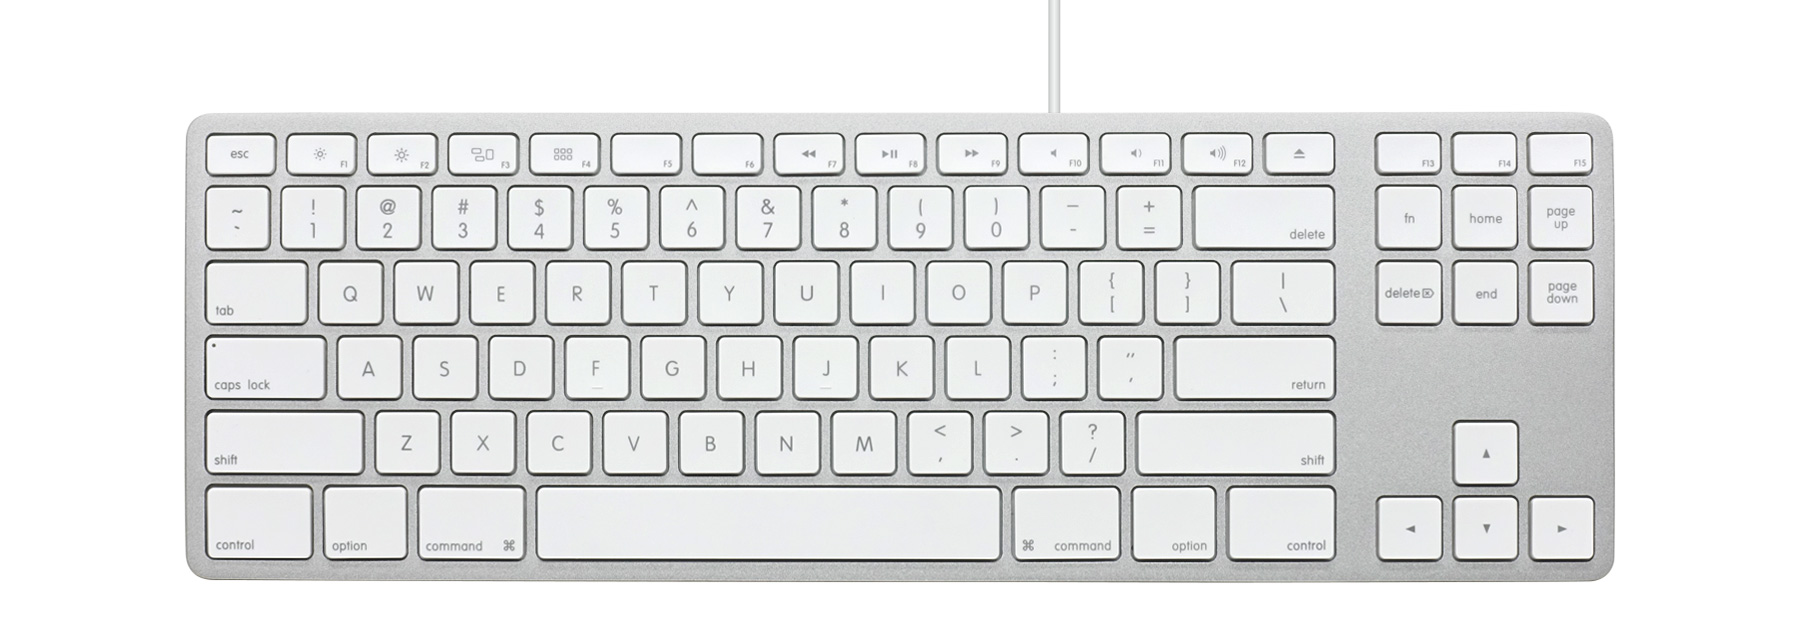 Matias Wired Aluminum Tenkeyless keyboard for Mac - Silver и‹±иЄћй…Ќе€—иЈЅе“Ѓжѓ…е ± |  гѓЂг‚¤гѓ¤гѓ†гѓѓг‚Їж ЄејЏдјљз¤ѕ